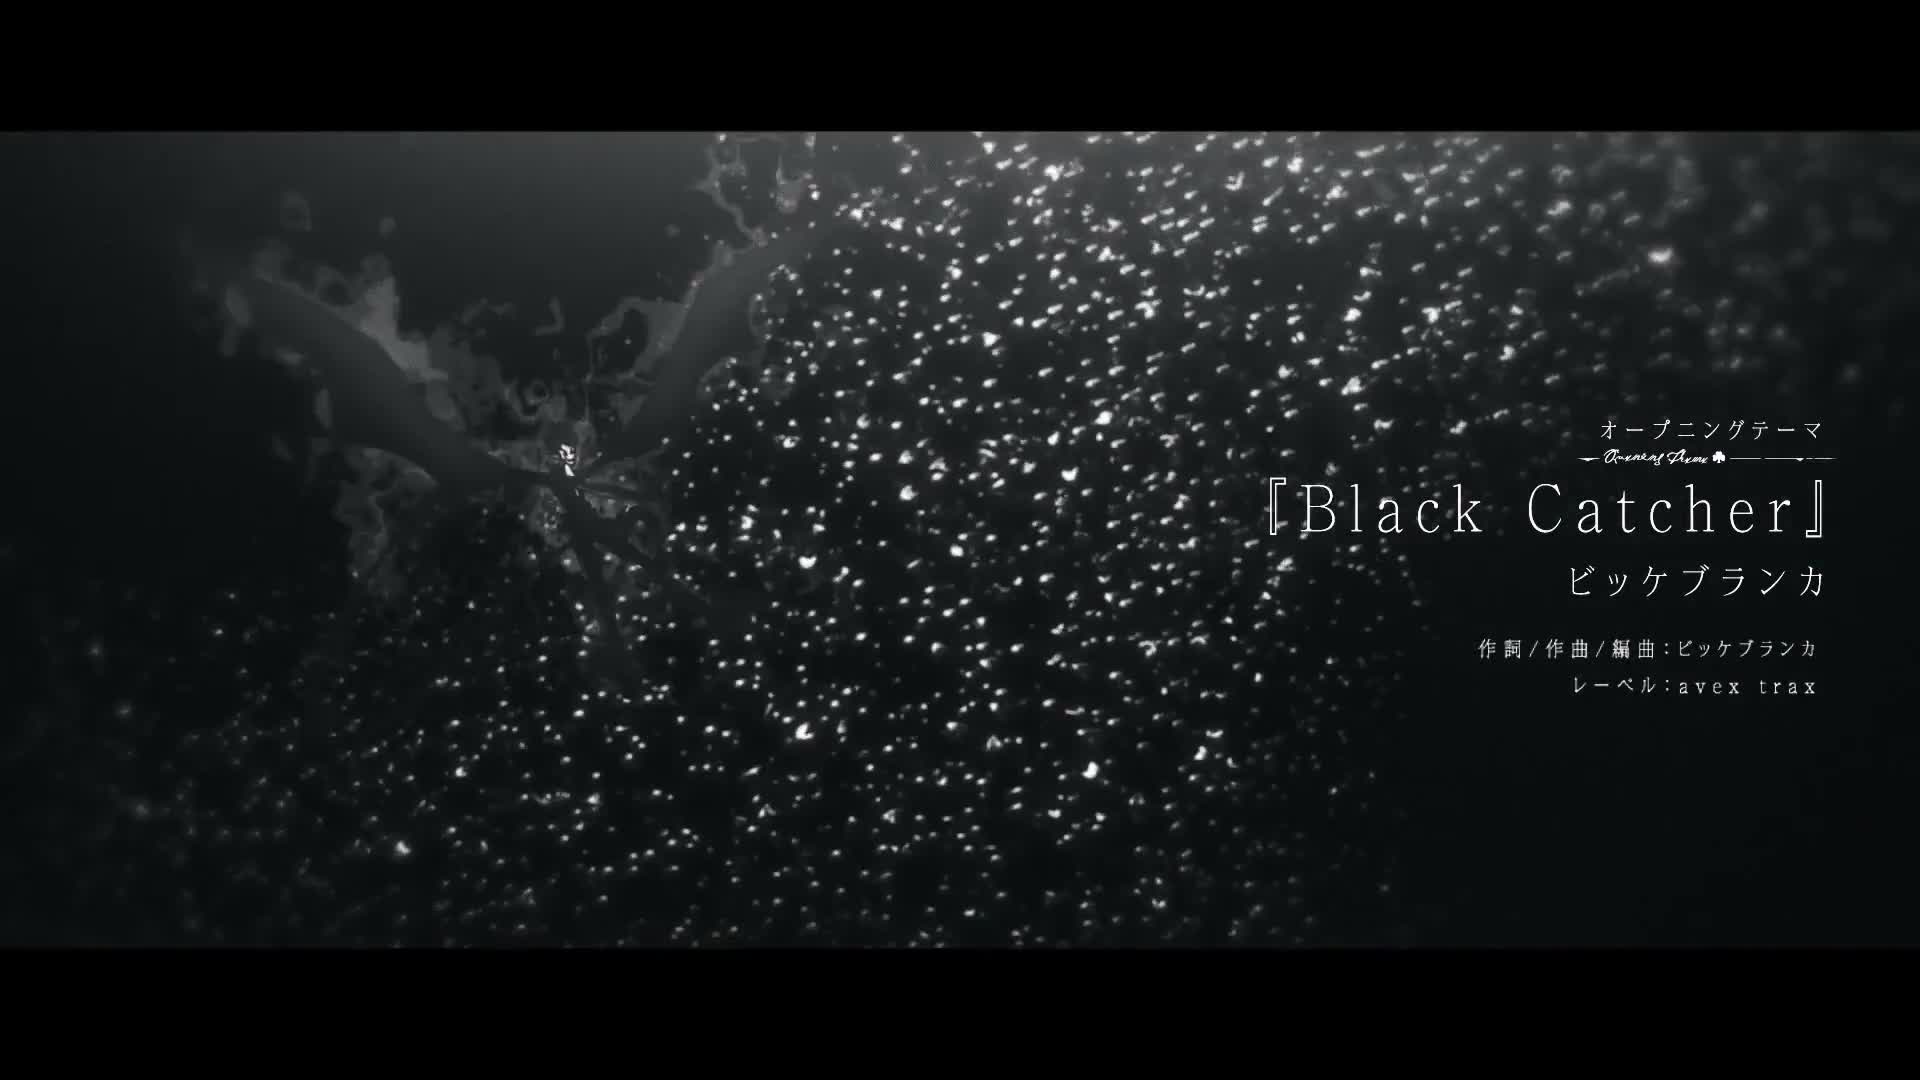 Black Clover (TV)